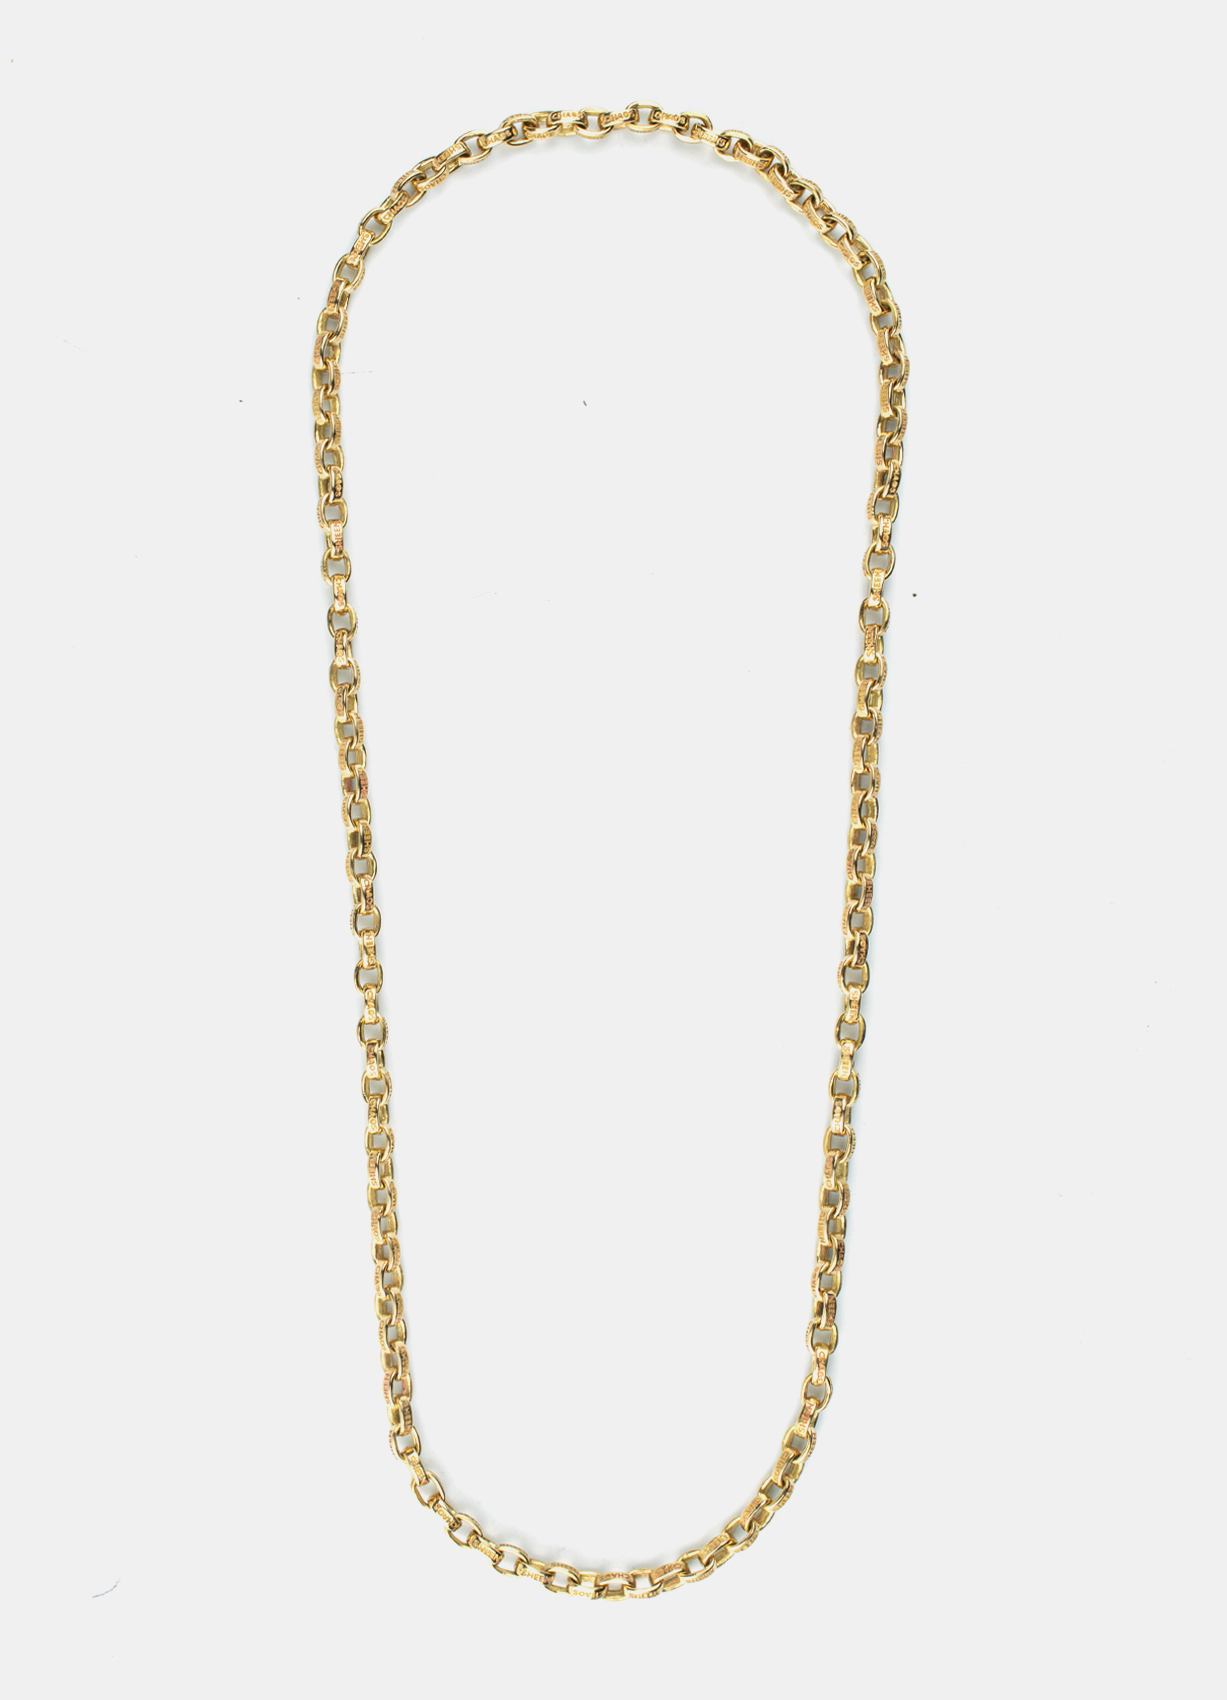 479 Custom Gold Necklace